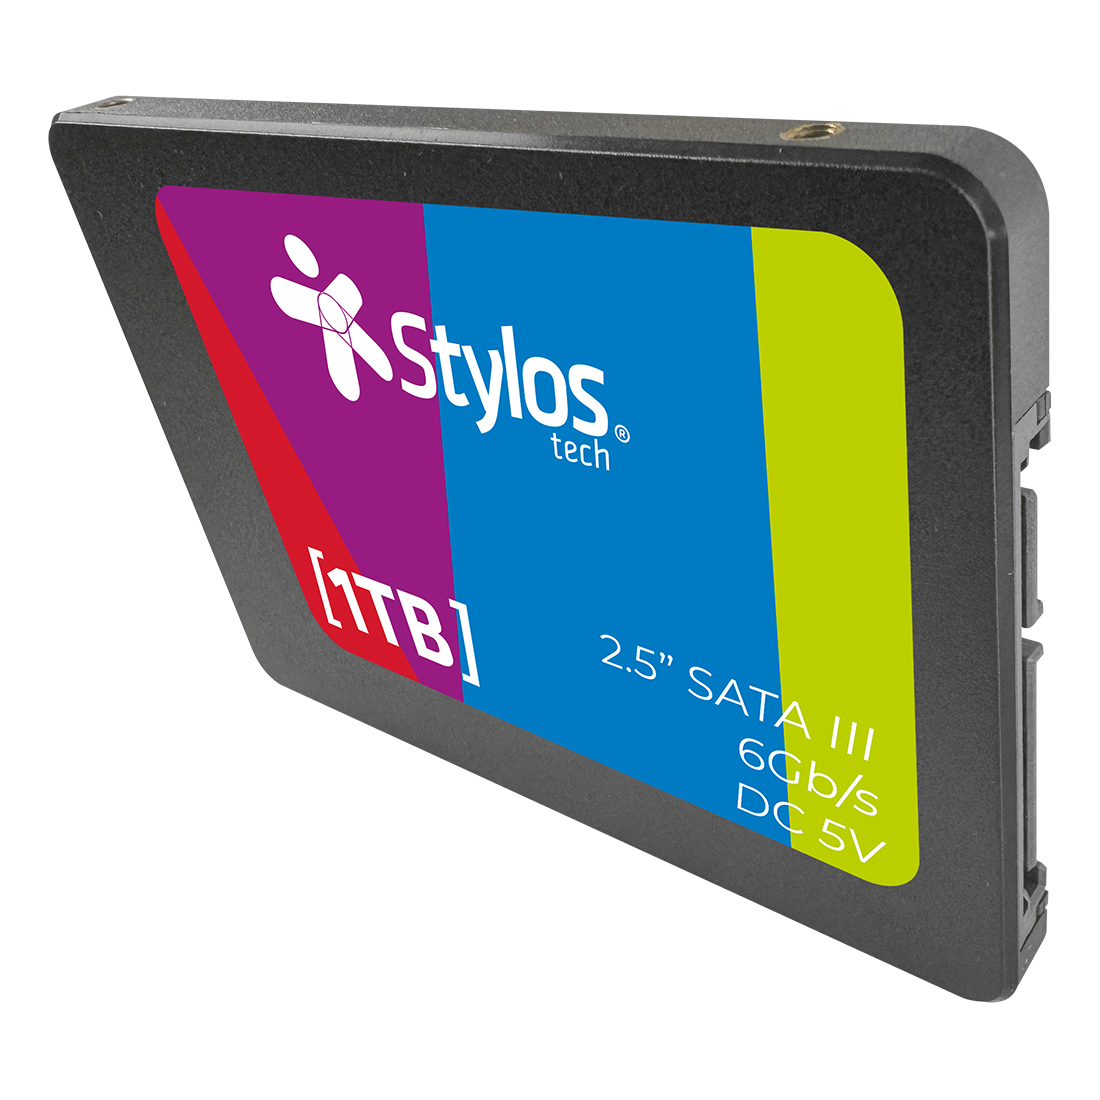 UNIDAD SSD STYLOS 1 TB SATA III 2.5